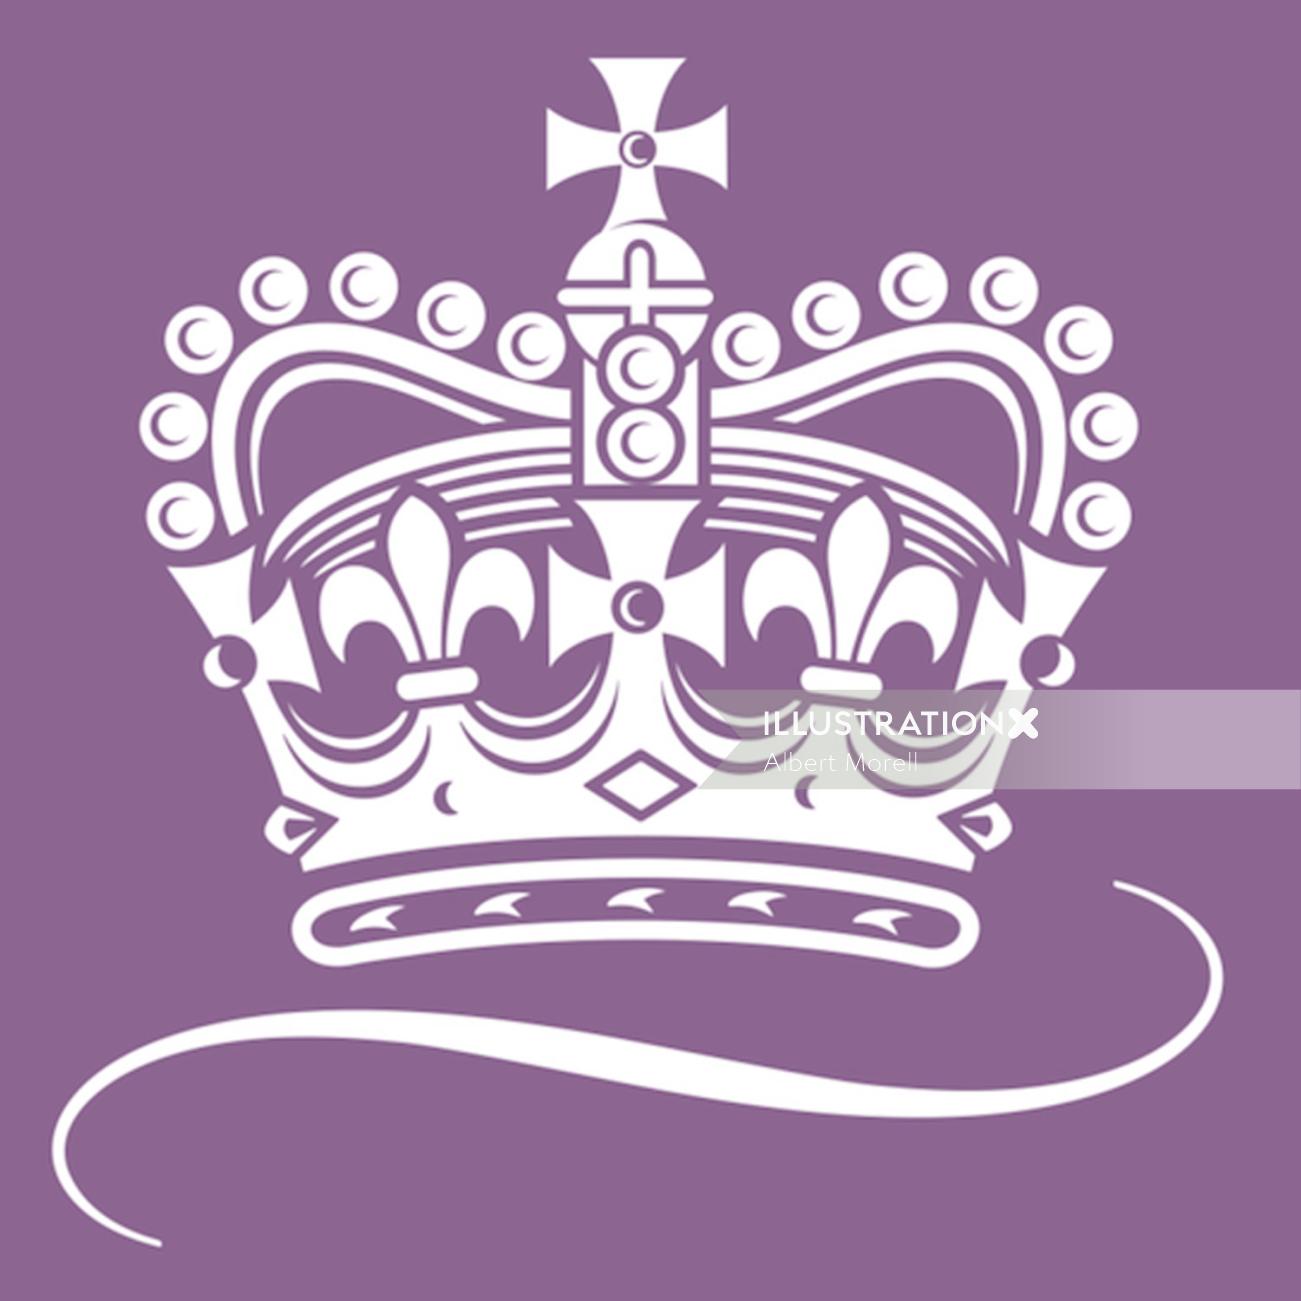 Royal Wedding Crown Icon
